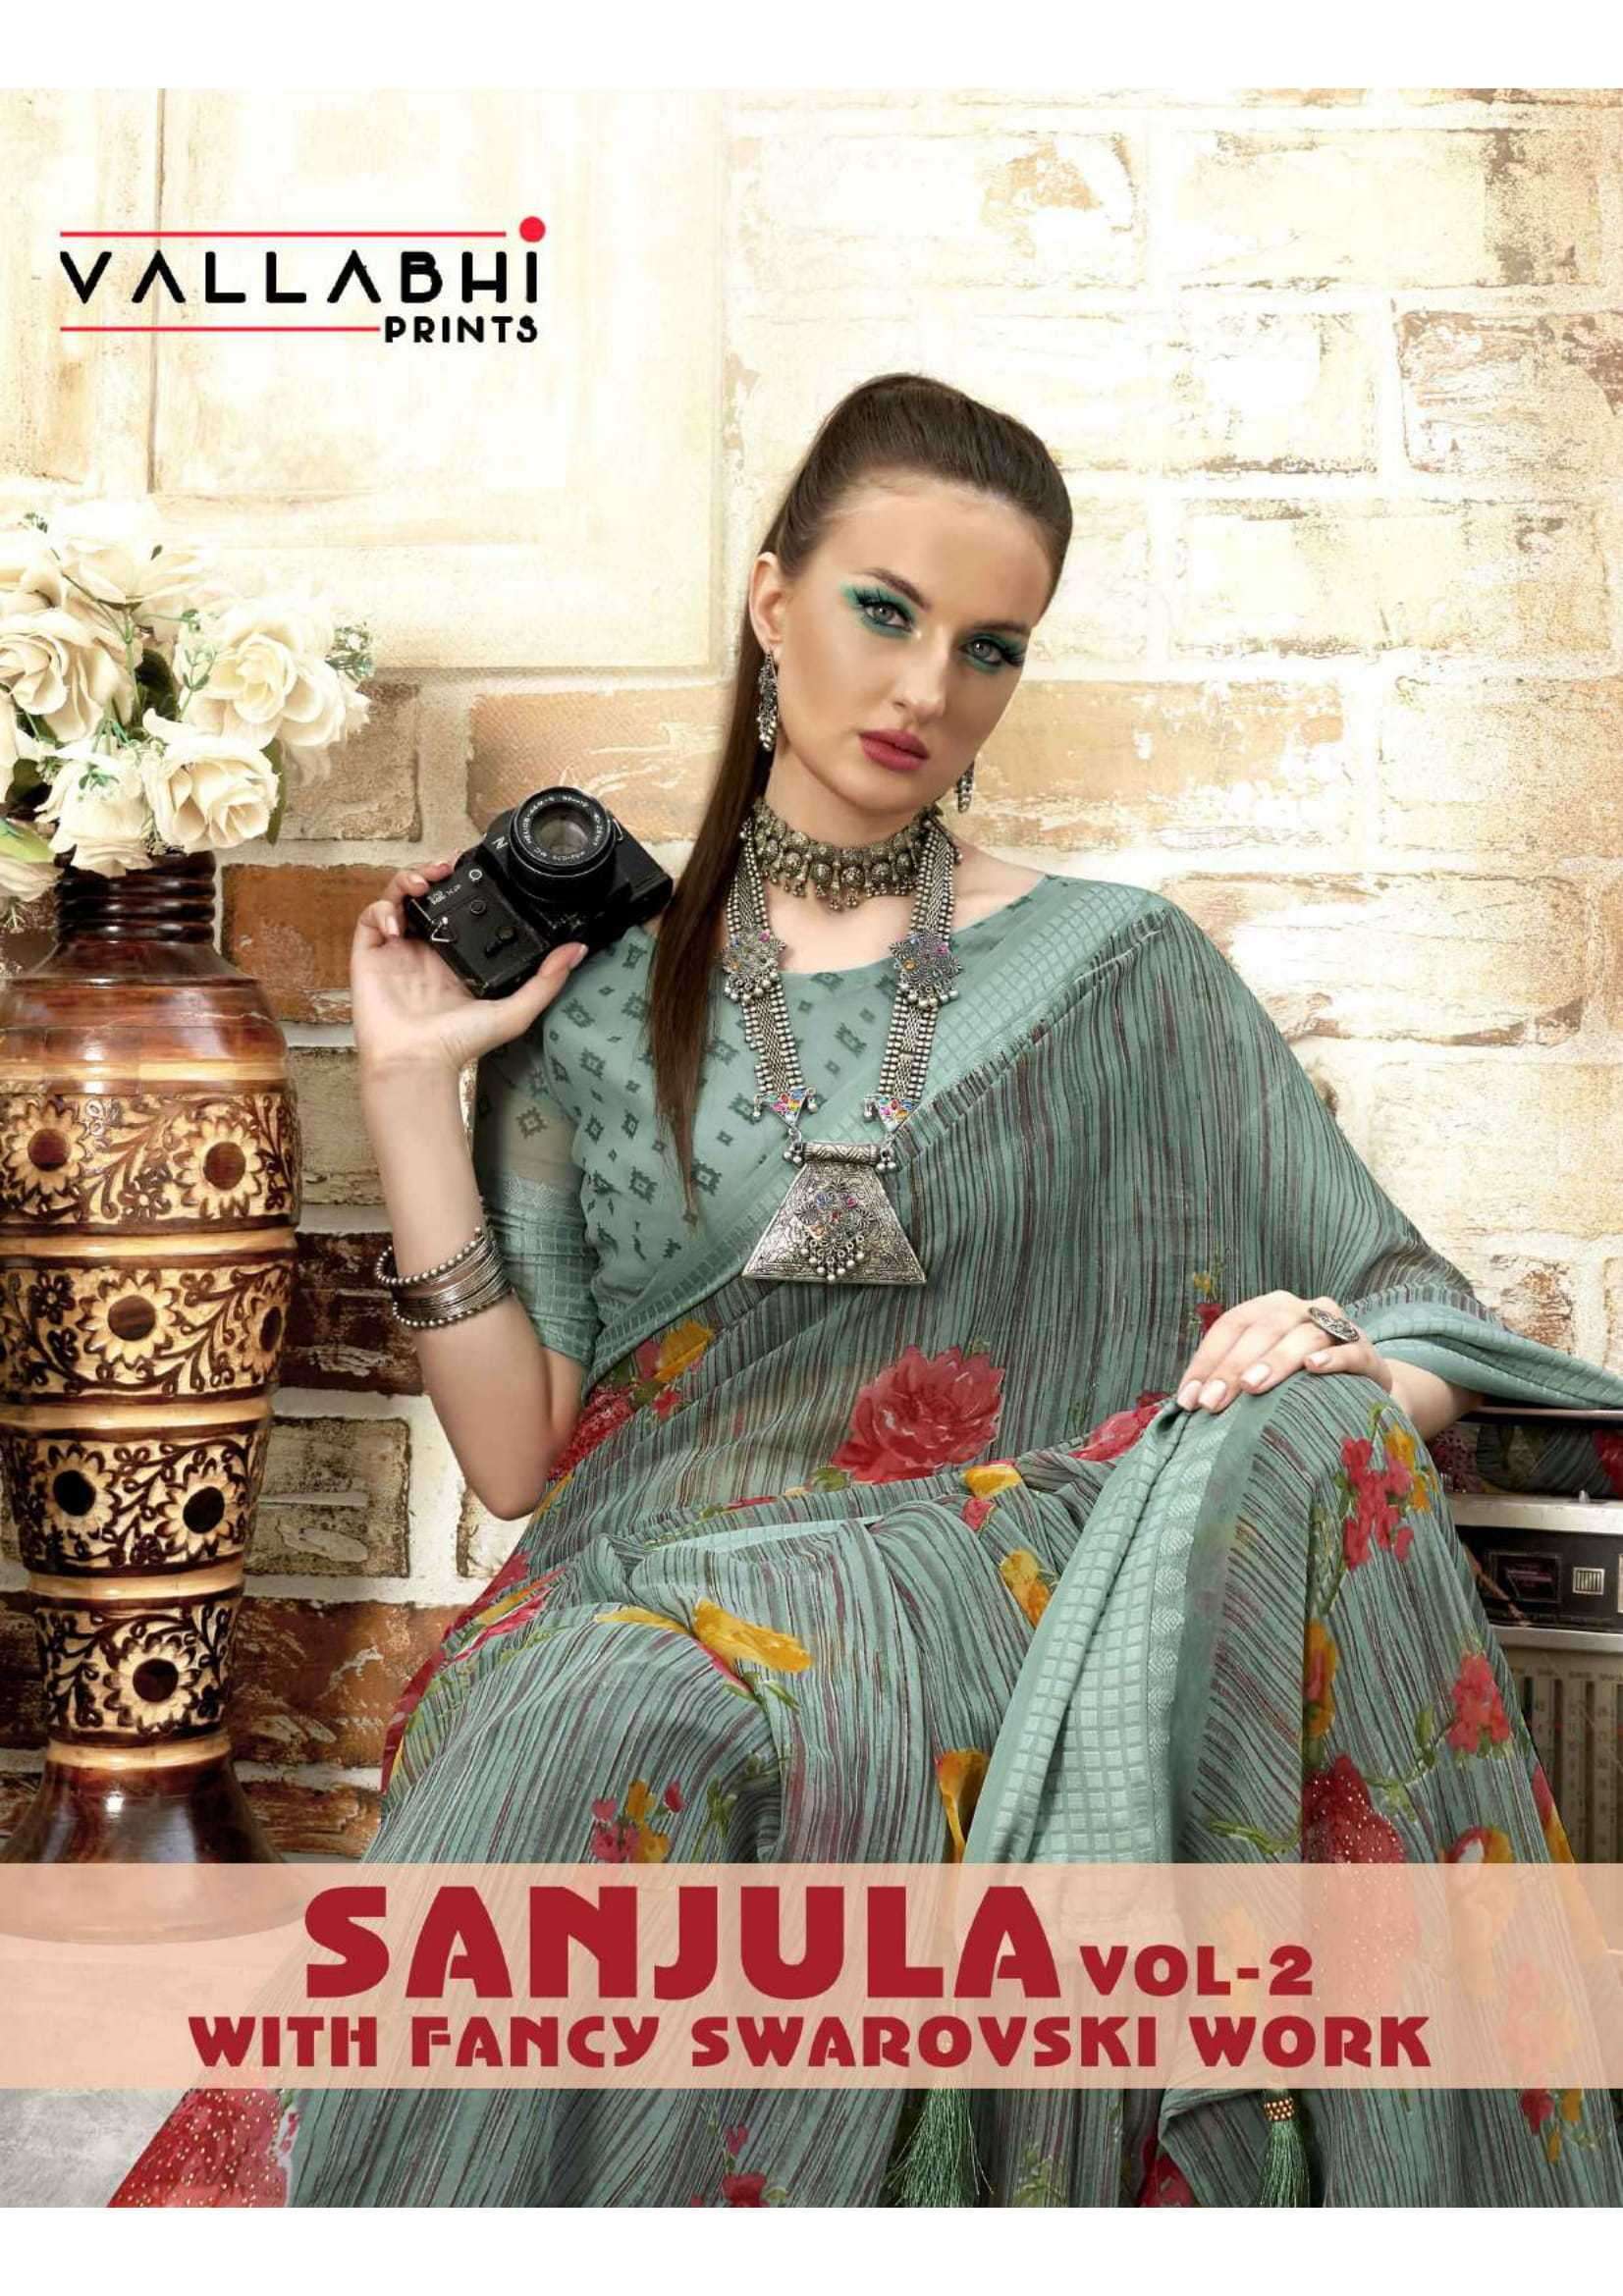 vallabhi prints sanjula vol 2 series 26271-26276 georgette saree